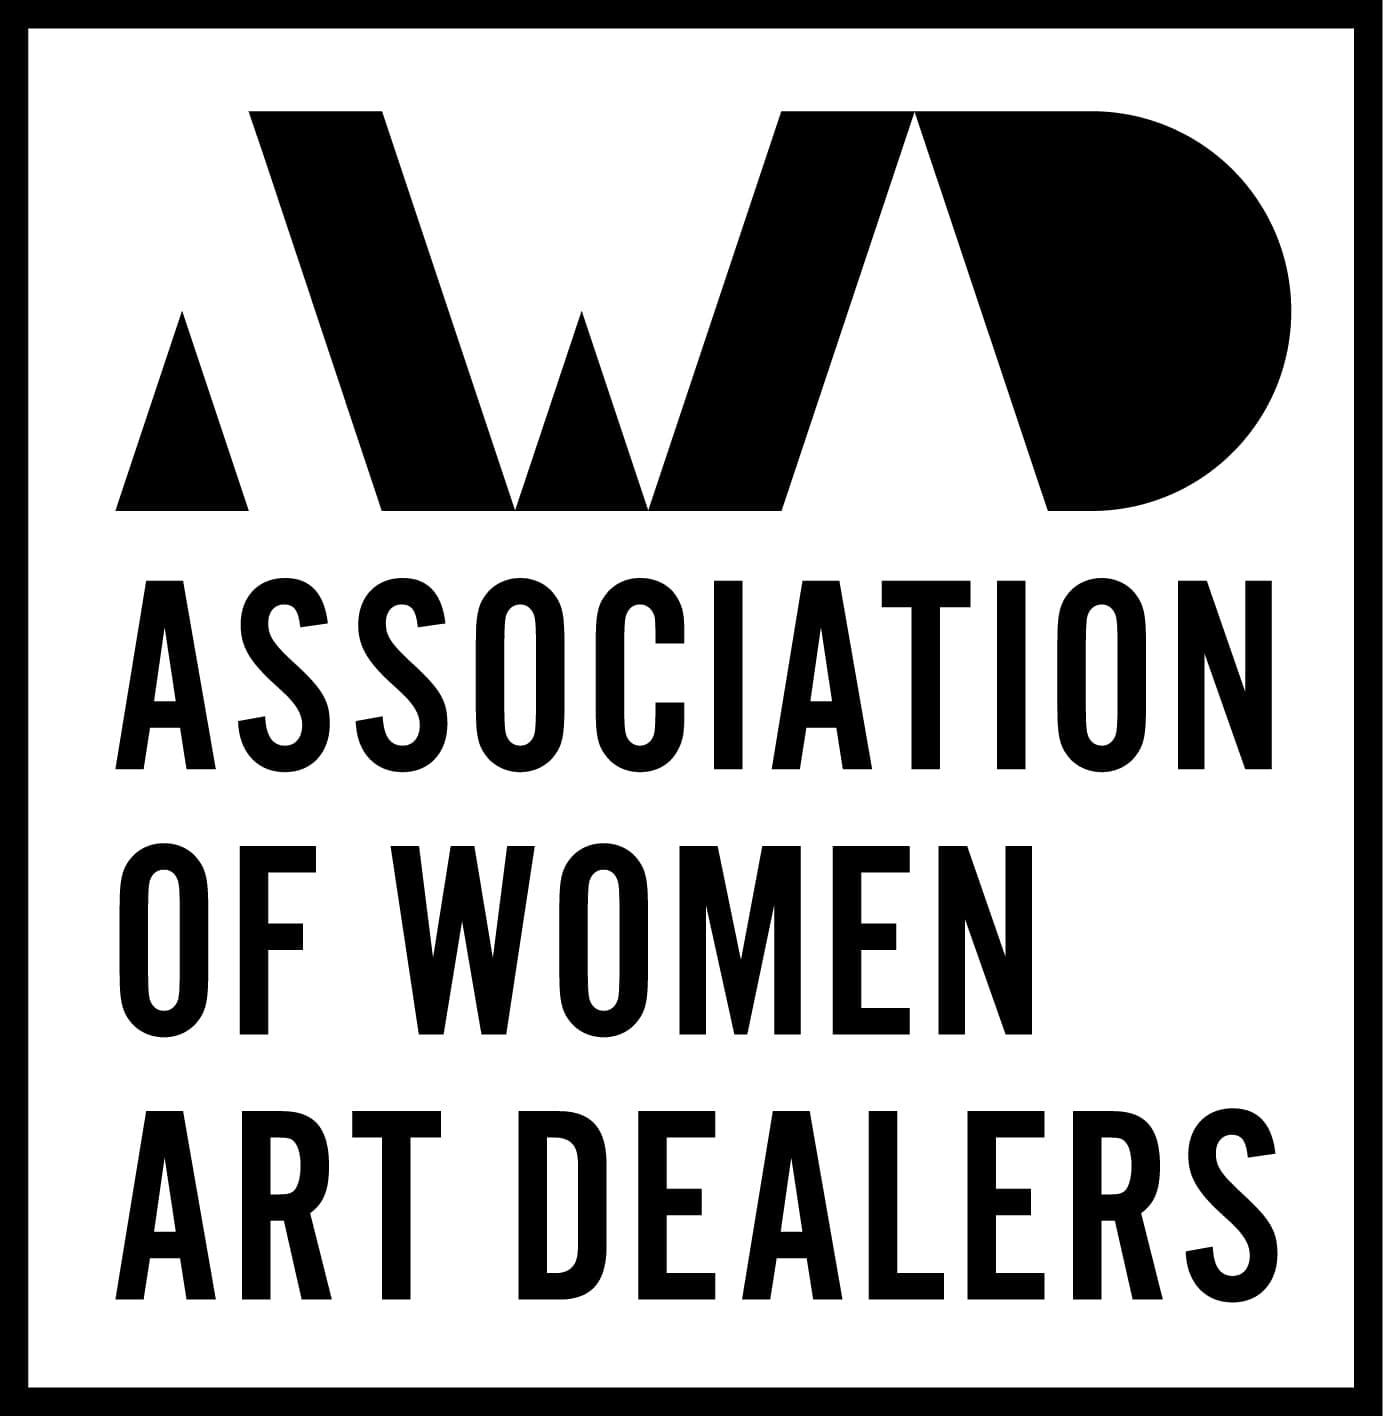 Association of Women Art Dealers logo